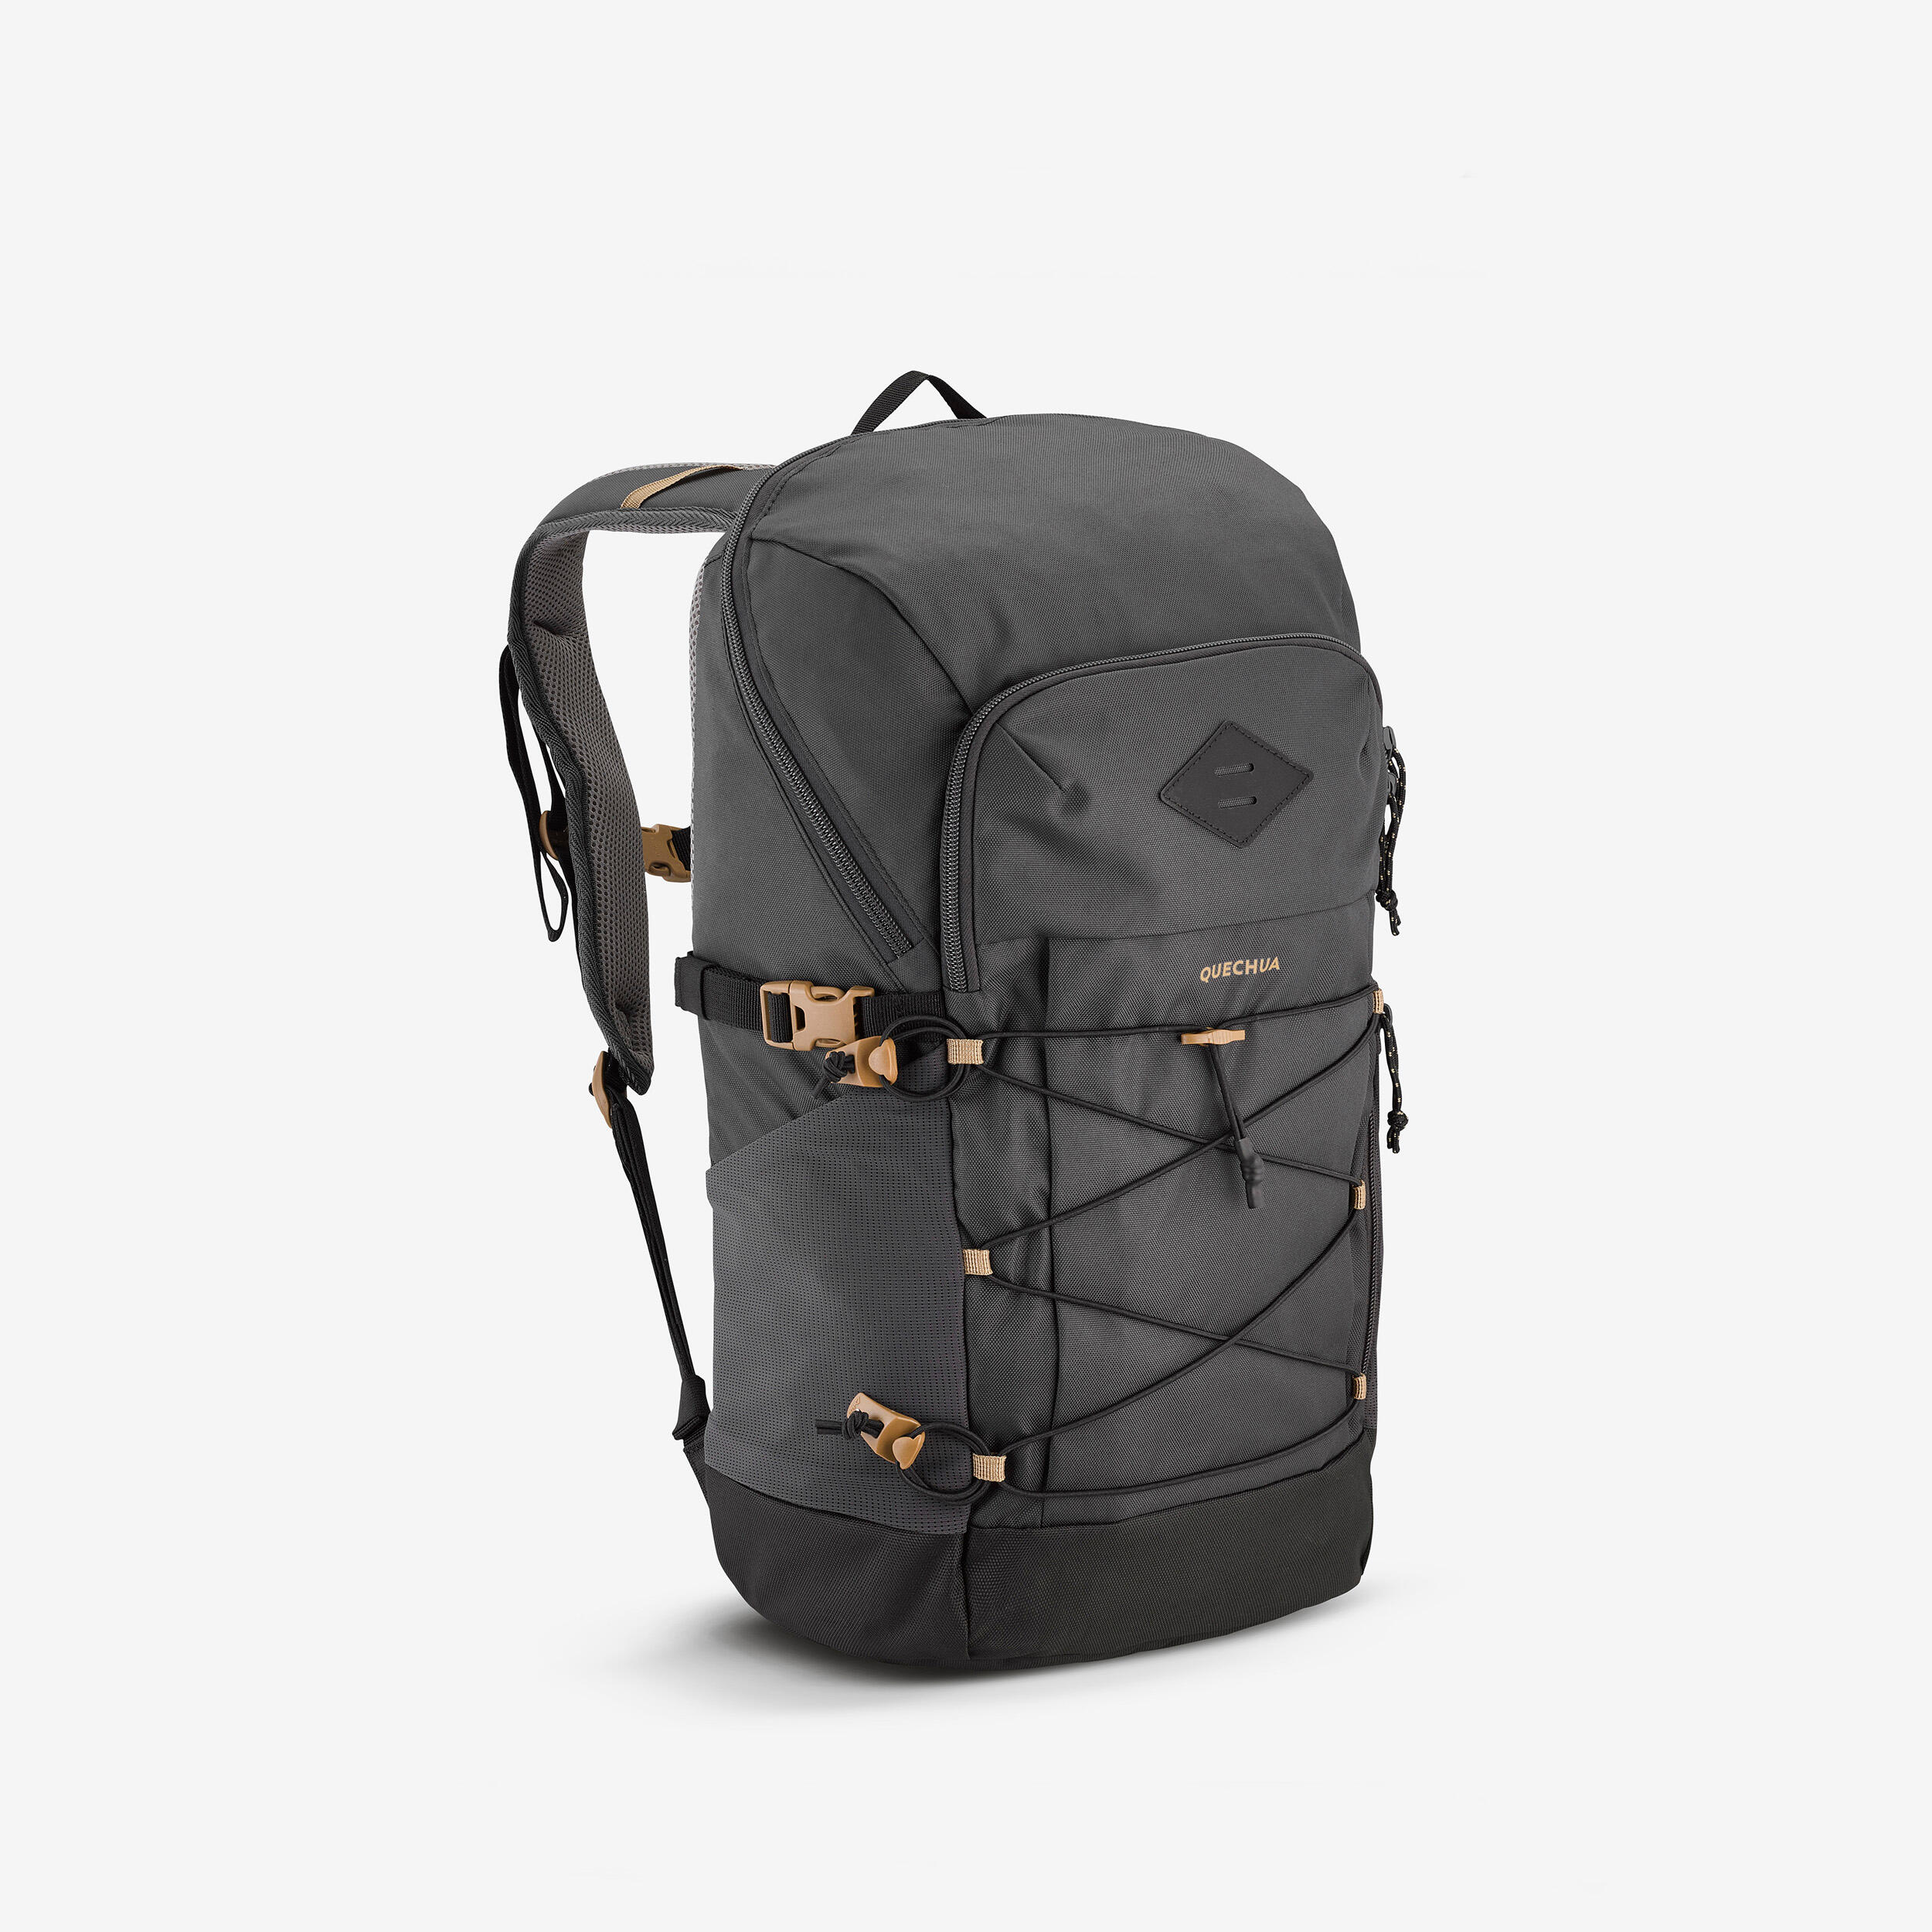 Decathlon backpack male / female / student mini sports leisure travel bag  canvas bag 10L QUECHUA | Backpacks, Travel and leisure, Canvas bag